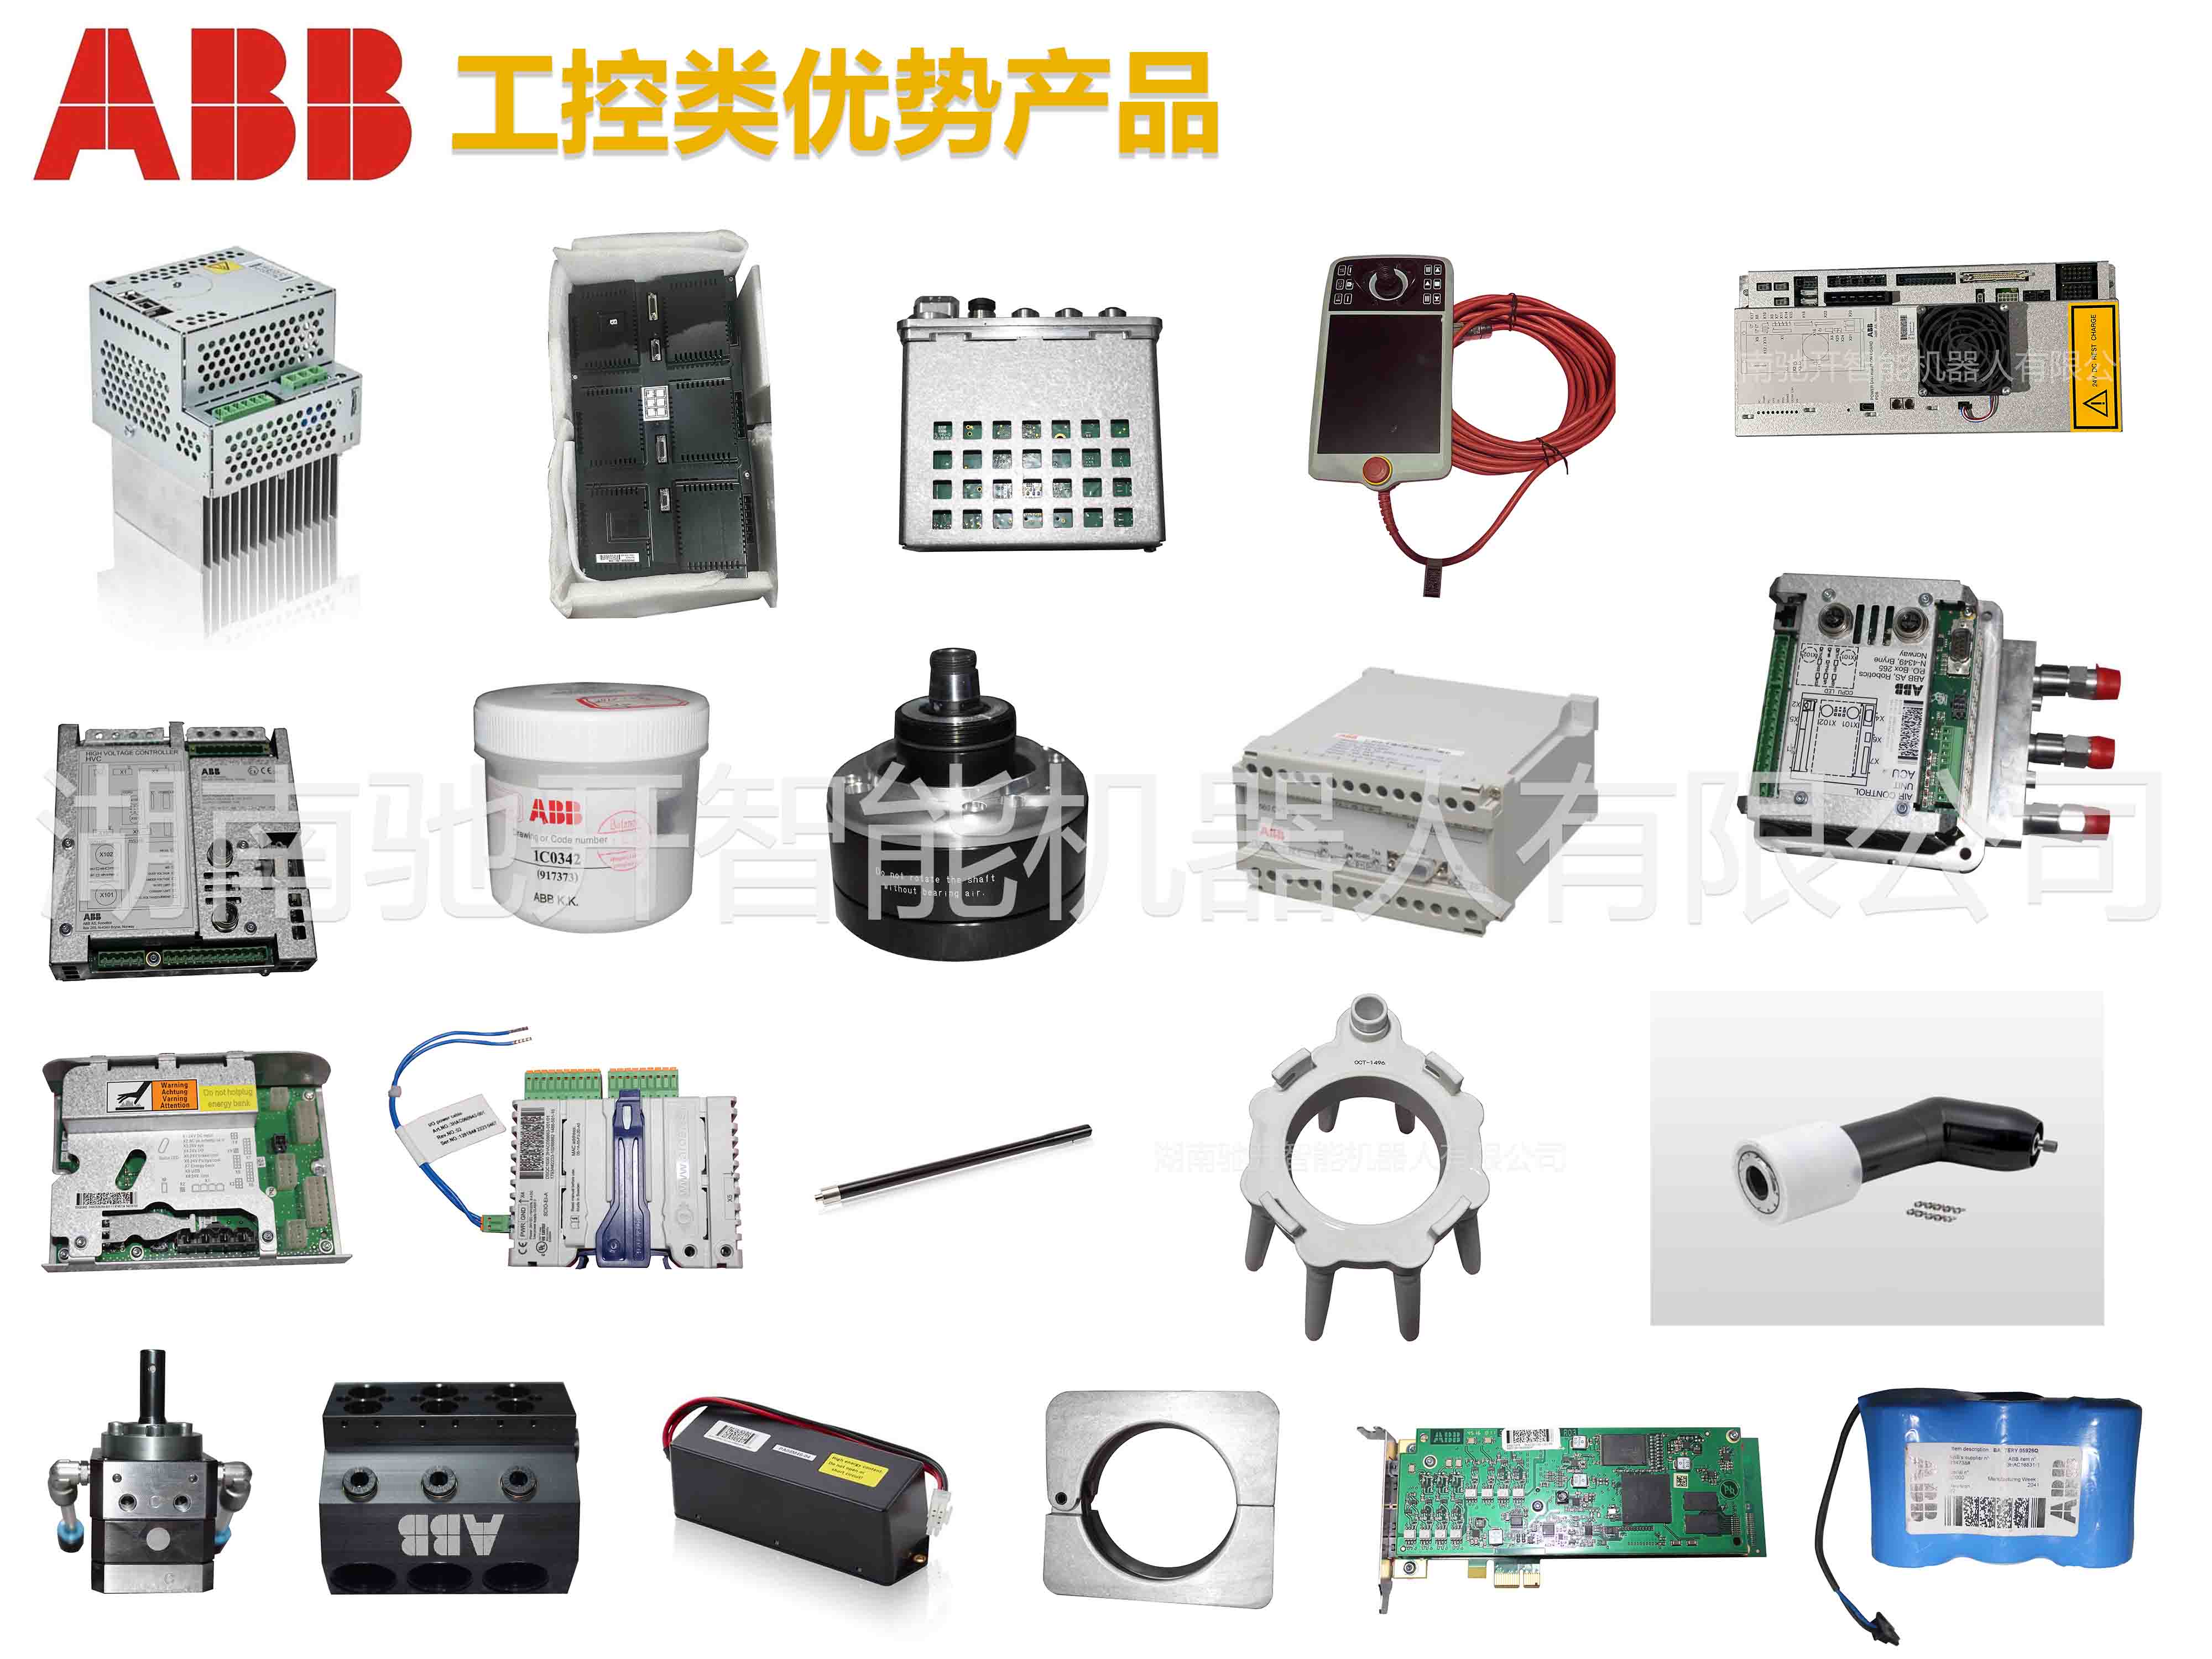 ABB外部轴伺服电机3HDAKG0004A007 ABB电机,伺服电机,ABB 3HDAKG0004A007,ABB外部轴电机,机器人电机